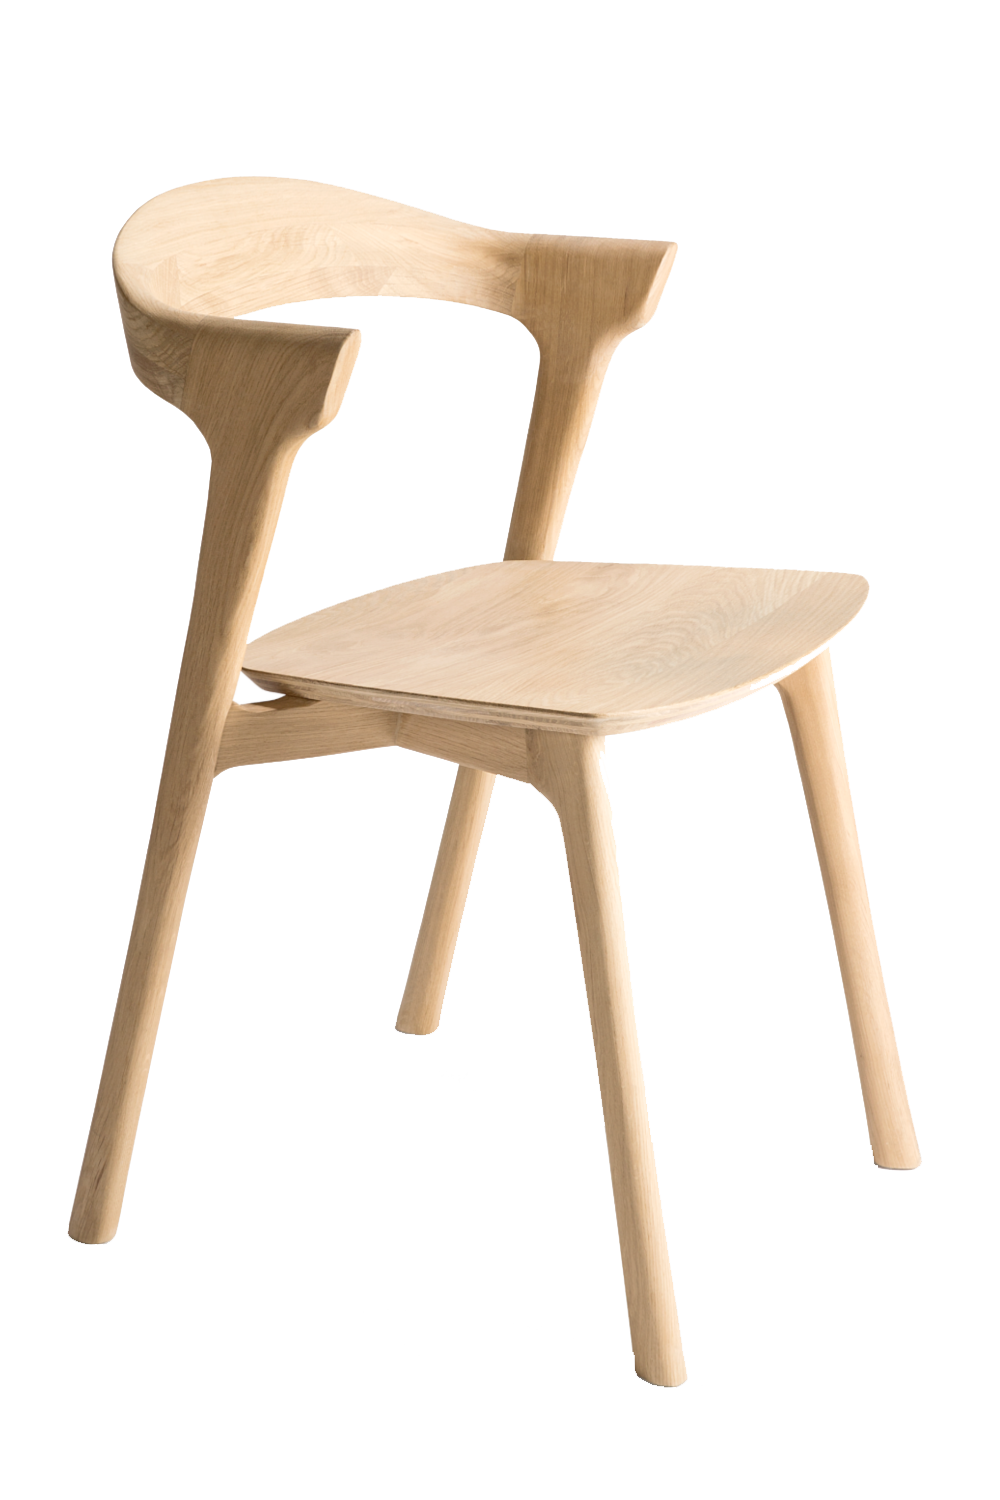 Image of Modern Oak Dining Chair | Ethnicraft Bok